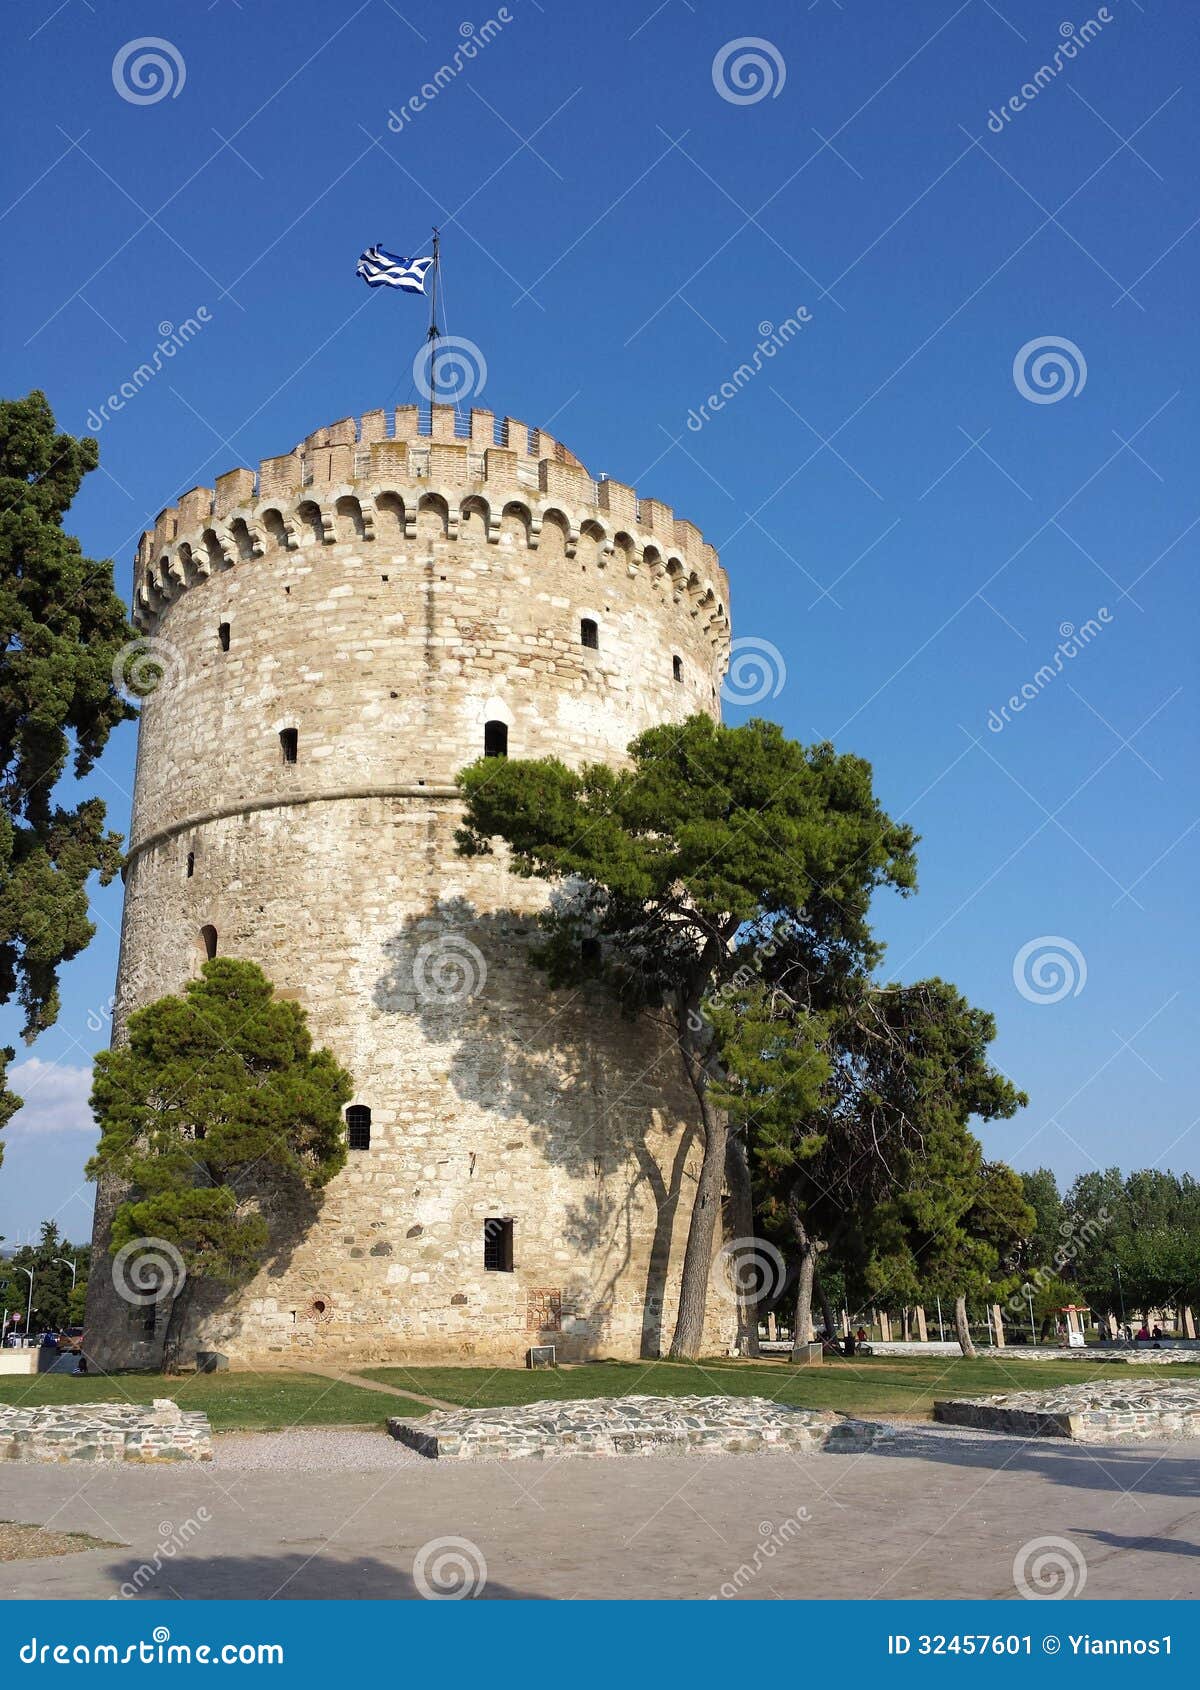 white tower in salonika - greece